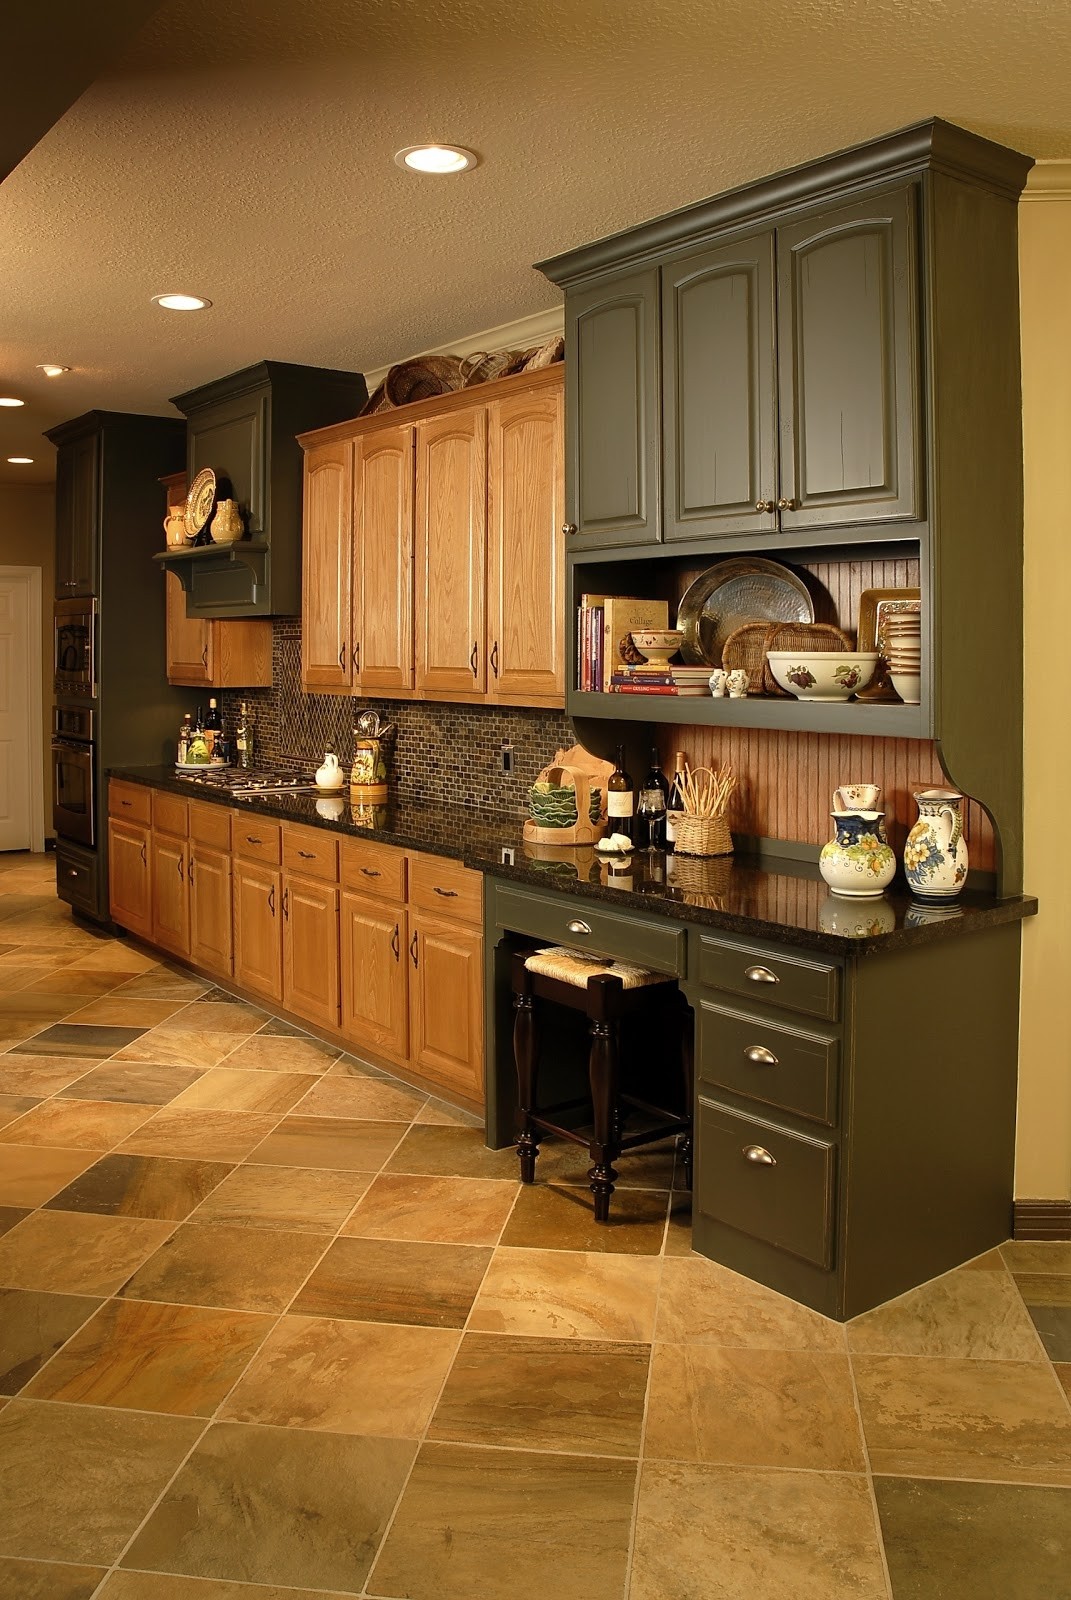 Oak cabinets with granite countertops